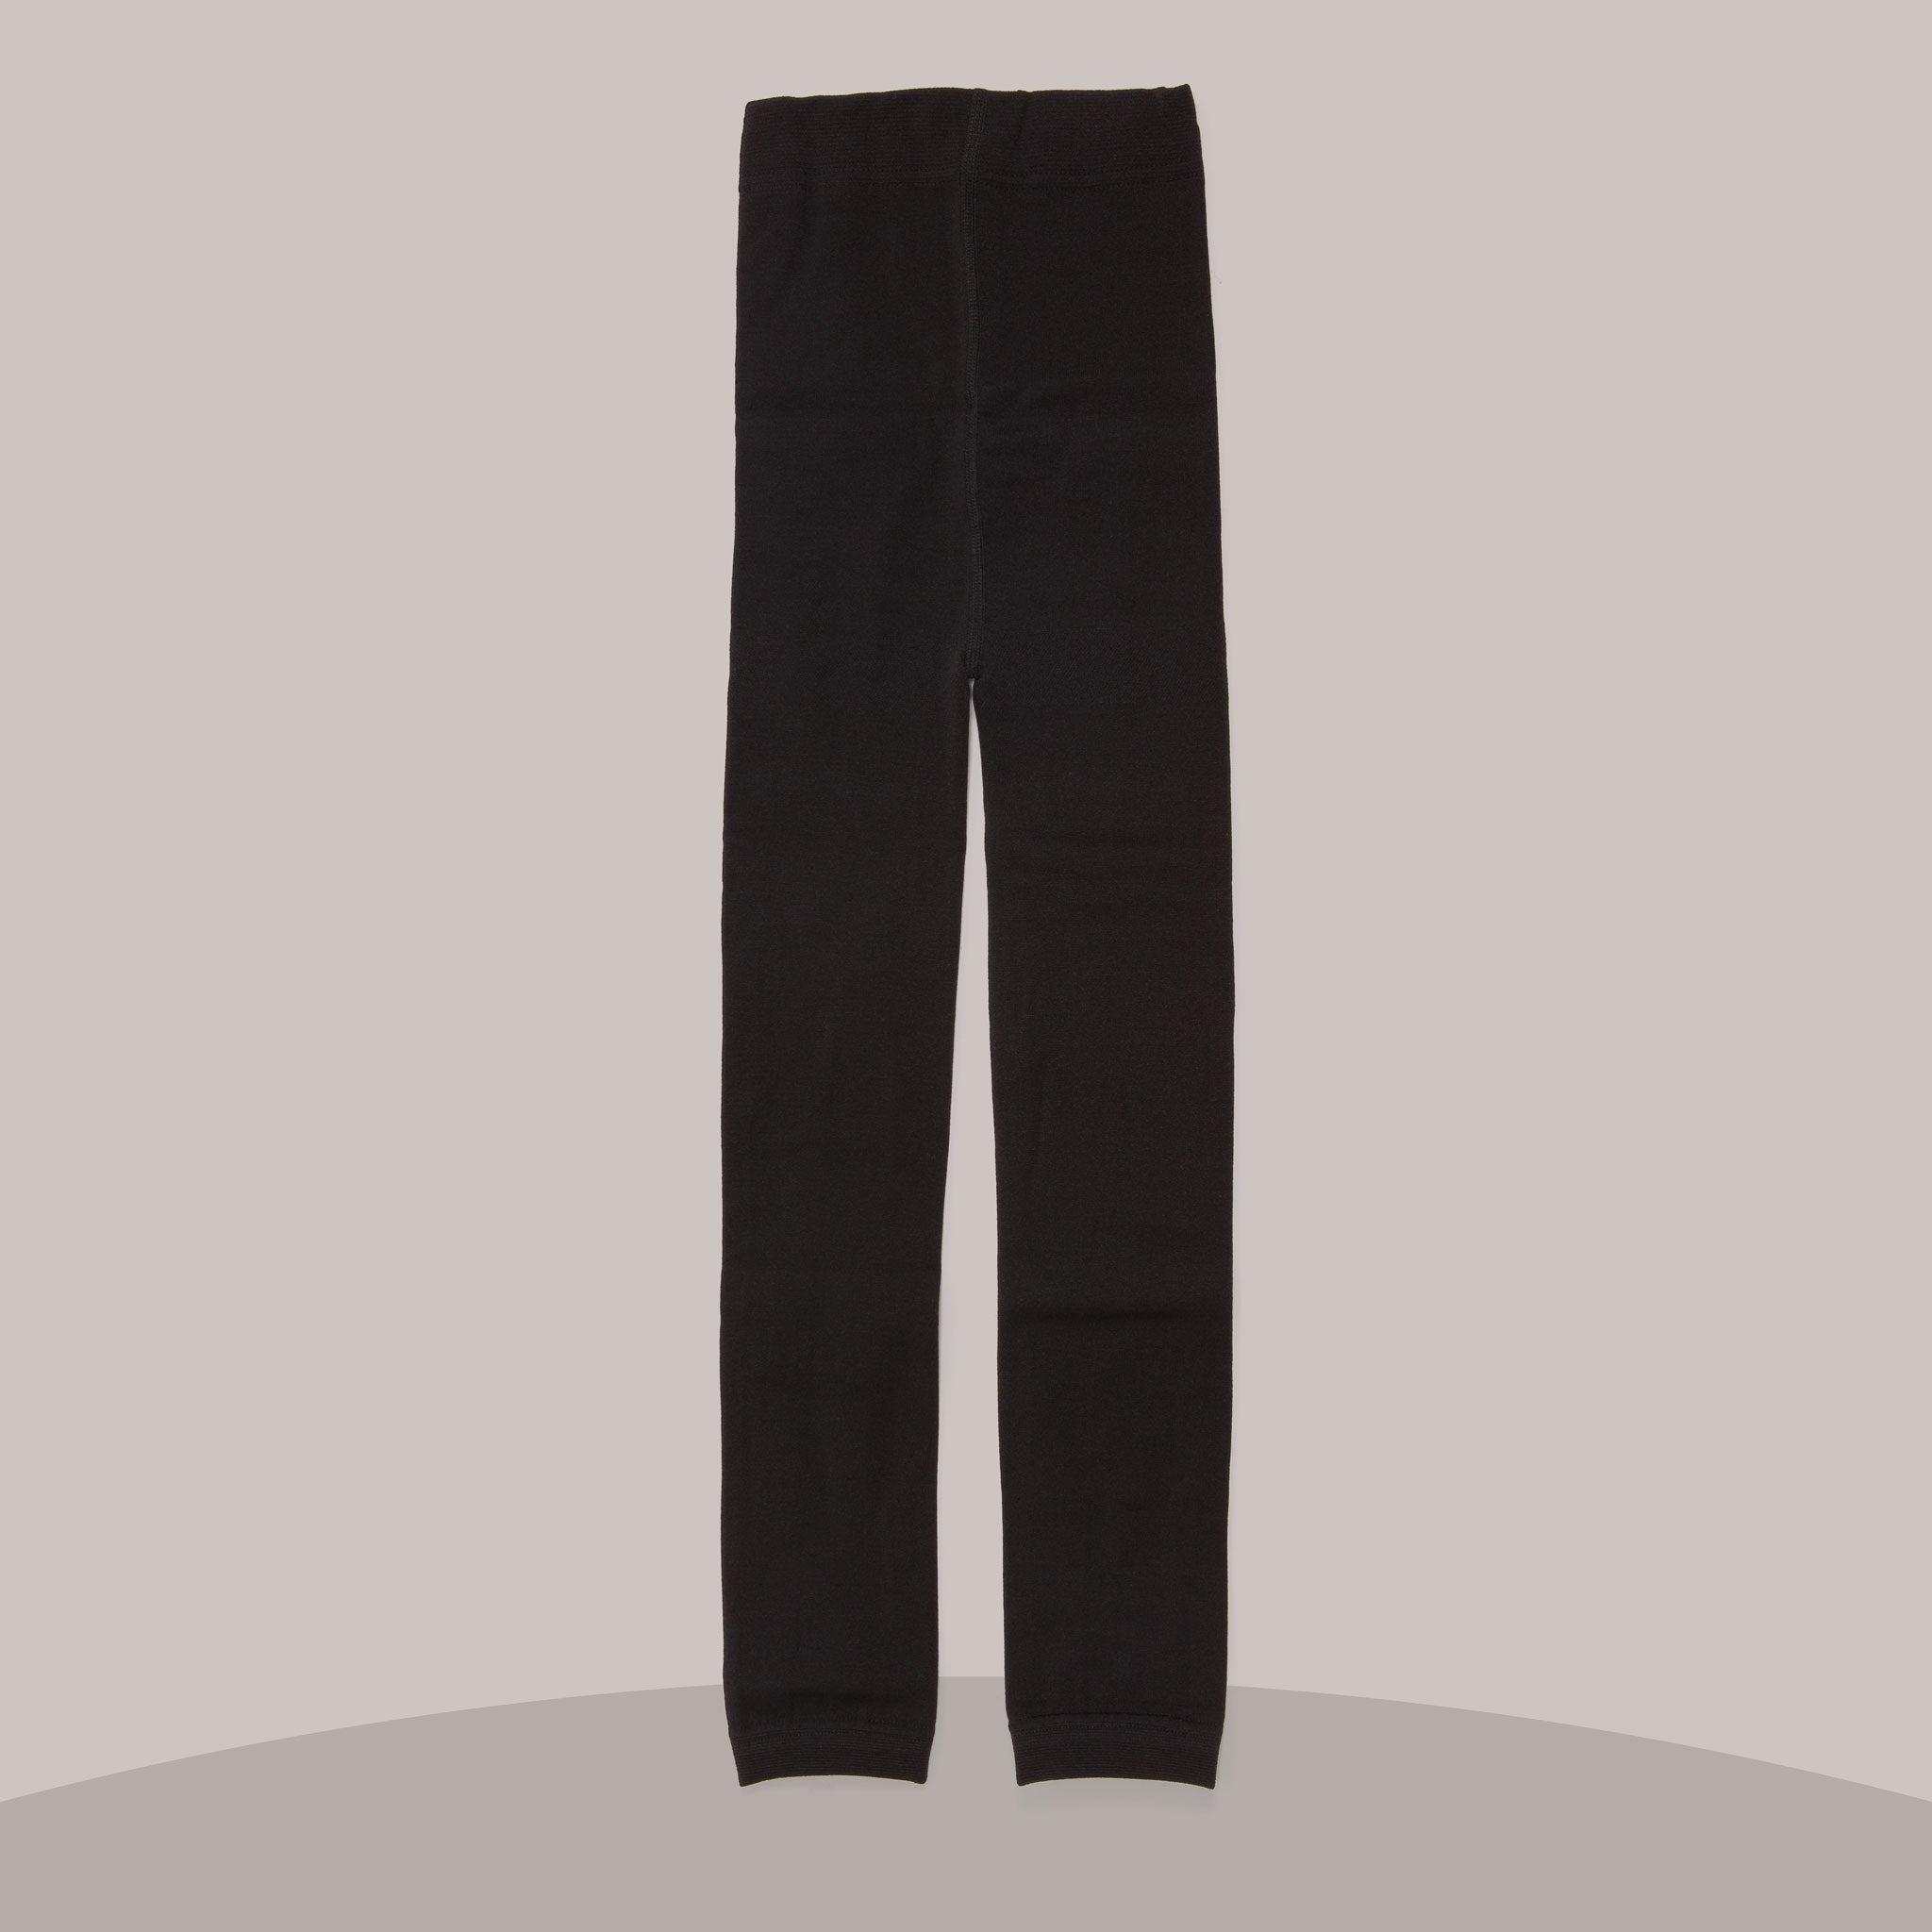 Girls Fleece Lined Leggings Size Medium (7/8) THE CHILDRENS PLACE Black NWT  | eBay